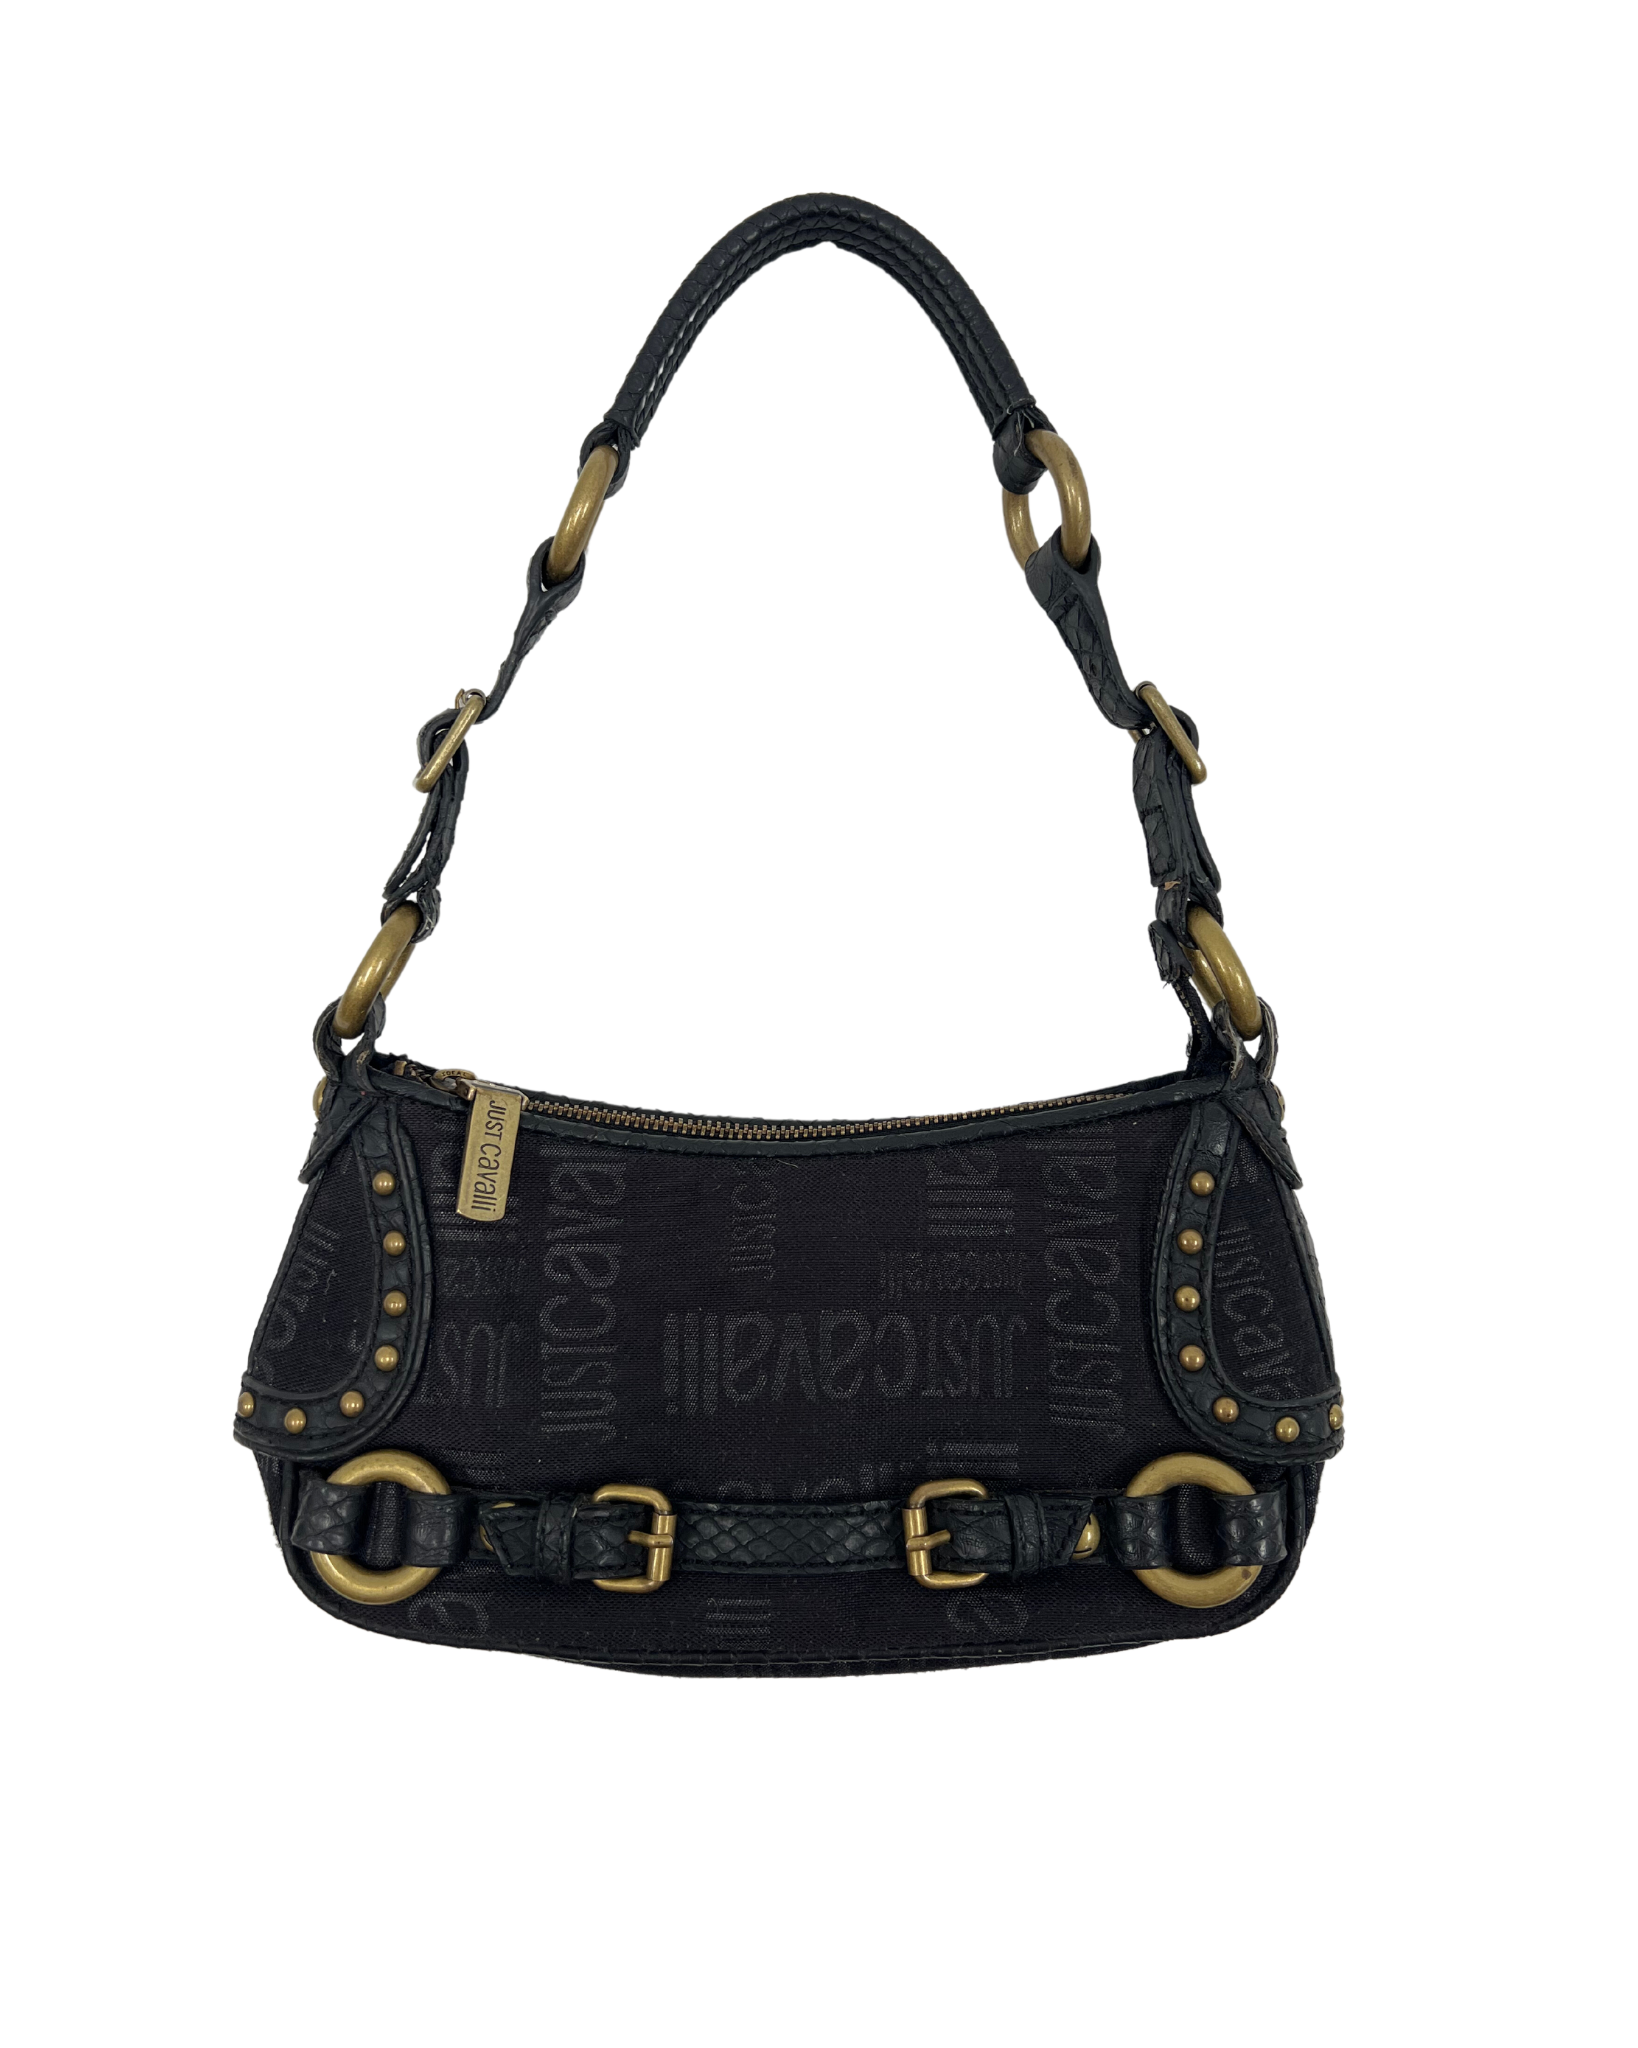 Roberto Cavalli Handbag with Chain Strap